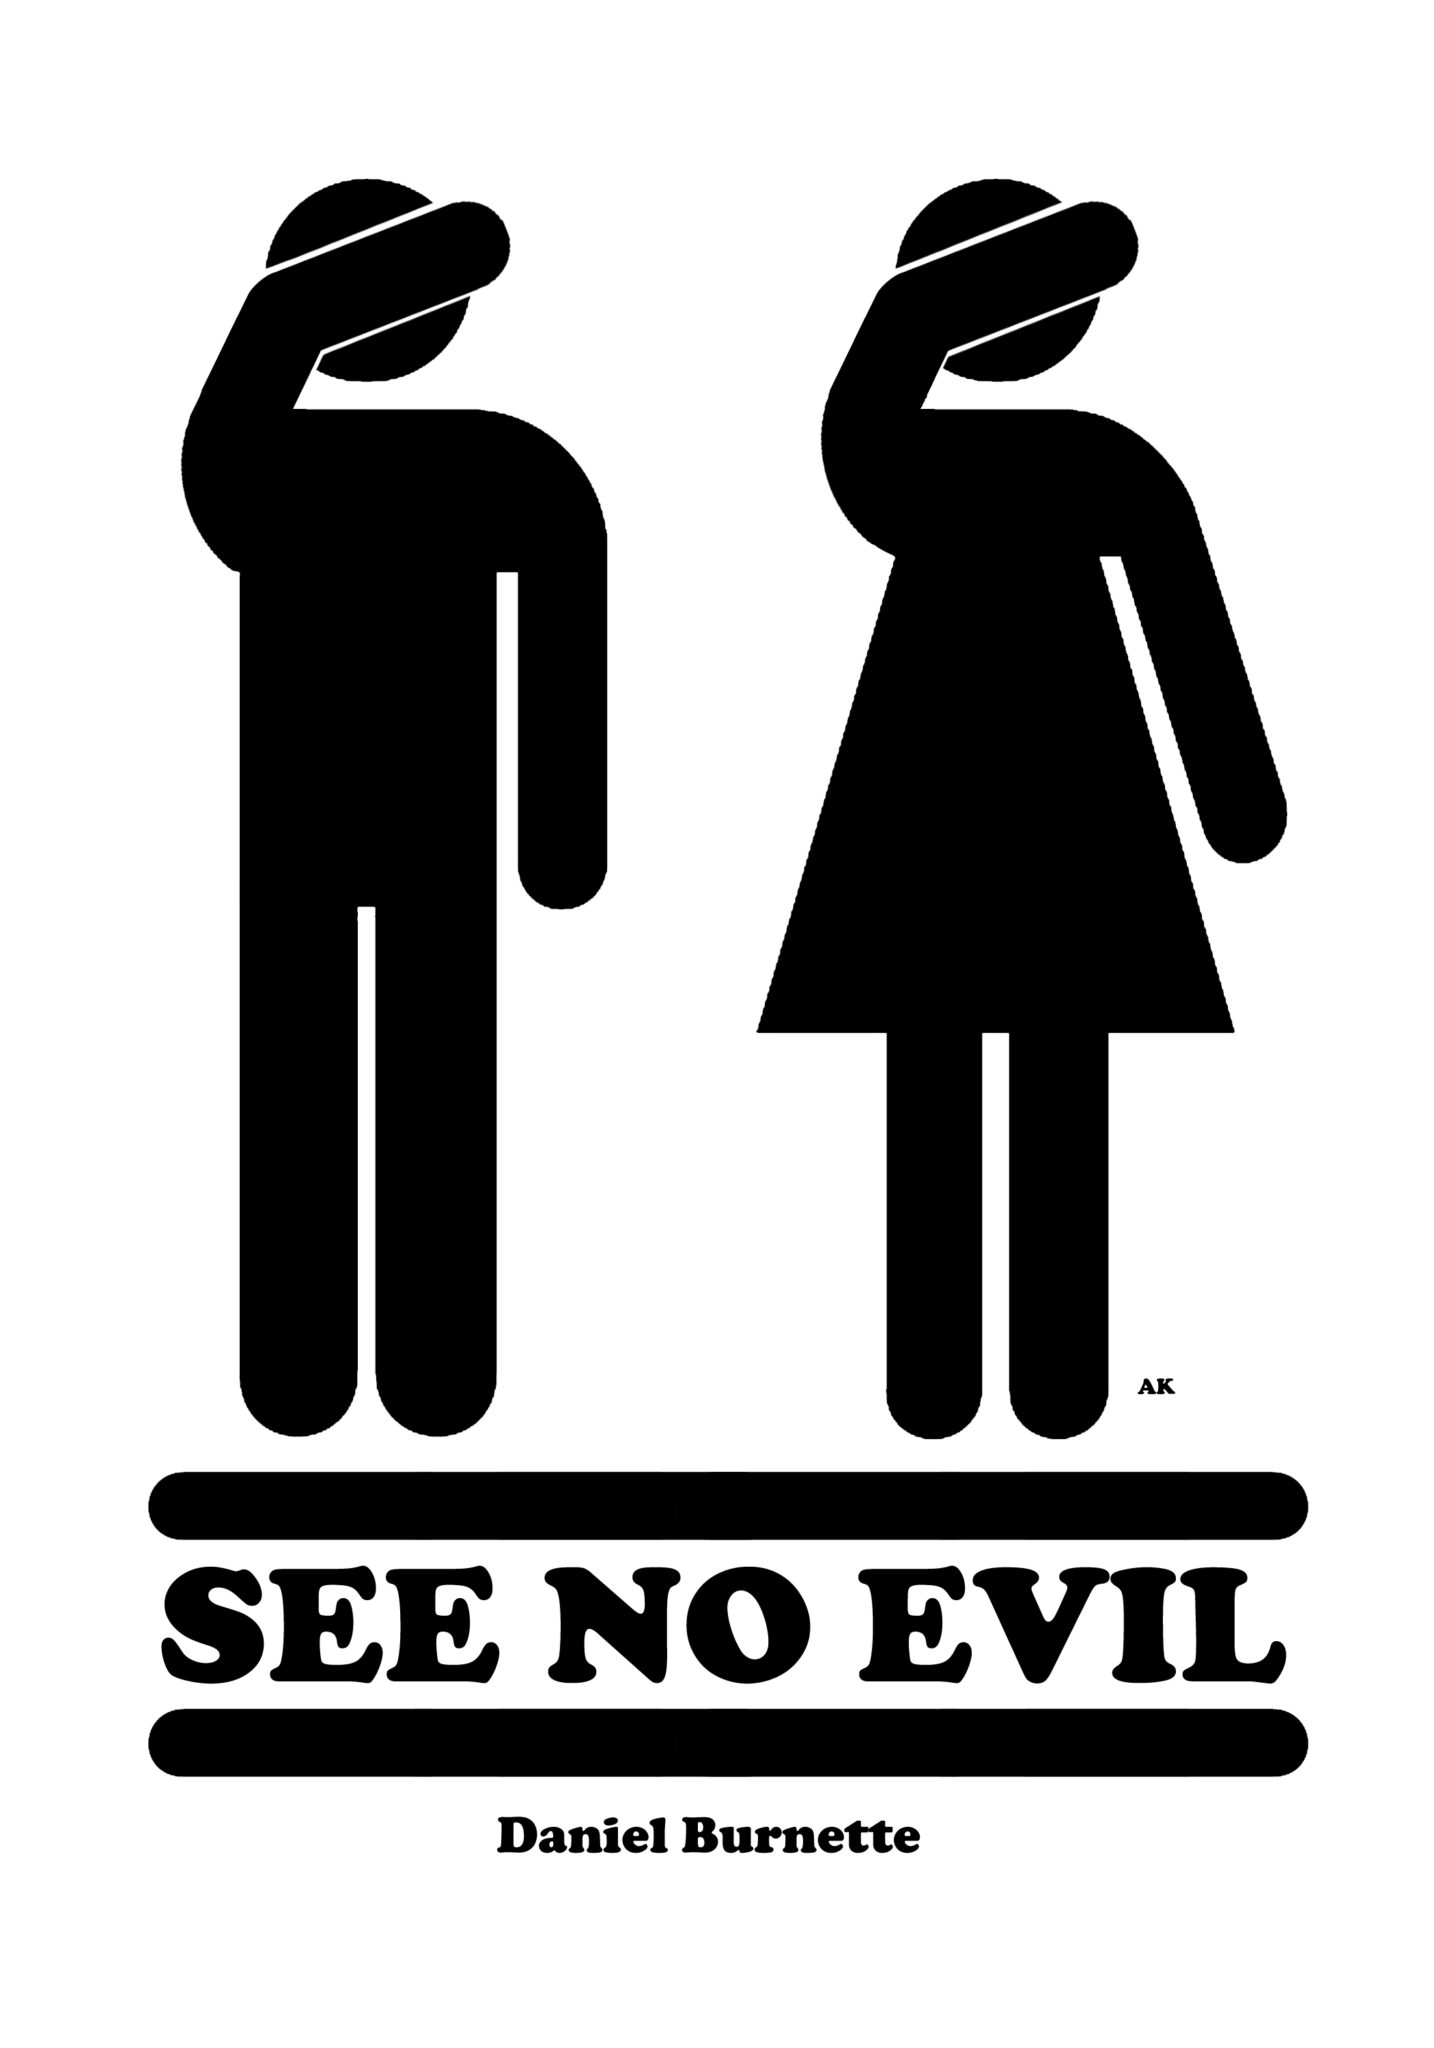 FREE: See No Evil by Daniel Burnette